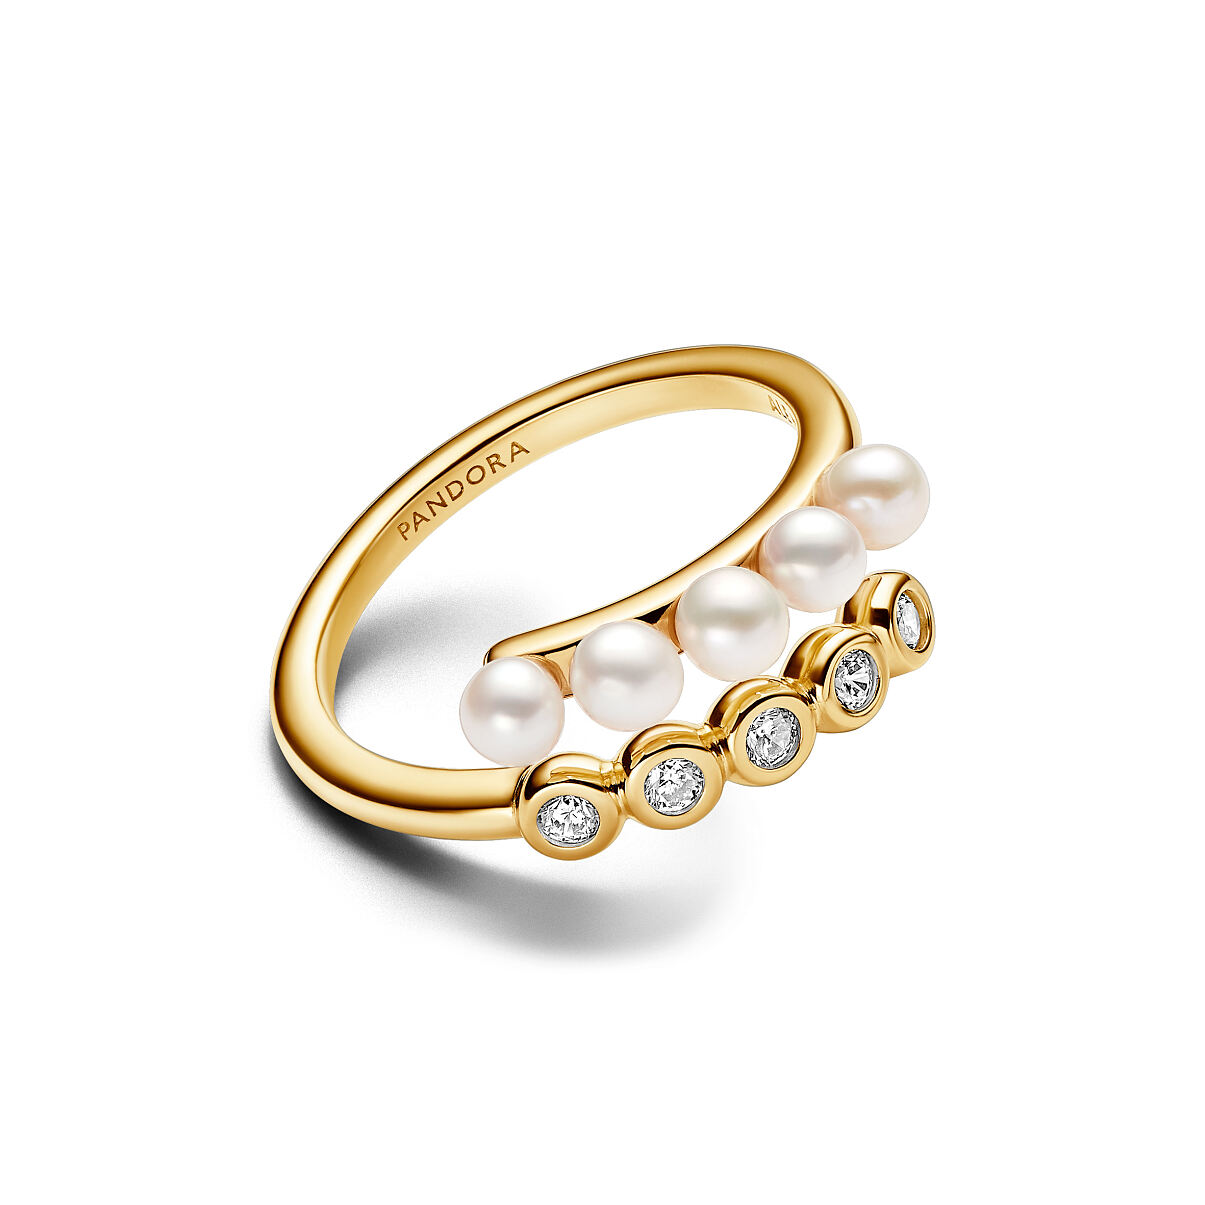 Pandora_Ring_14k Gold-plated_Freshwater Pearls_Cubic Zirconia_163146C01_149,00 Euro (3)